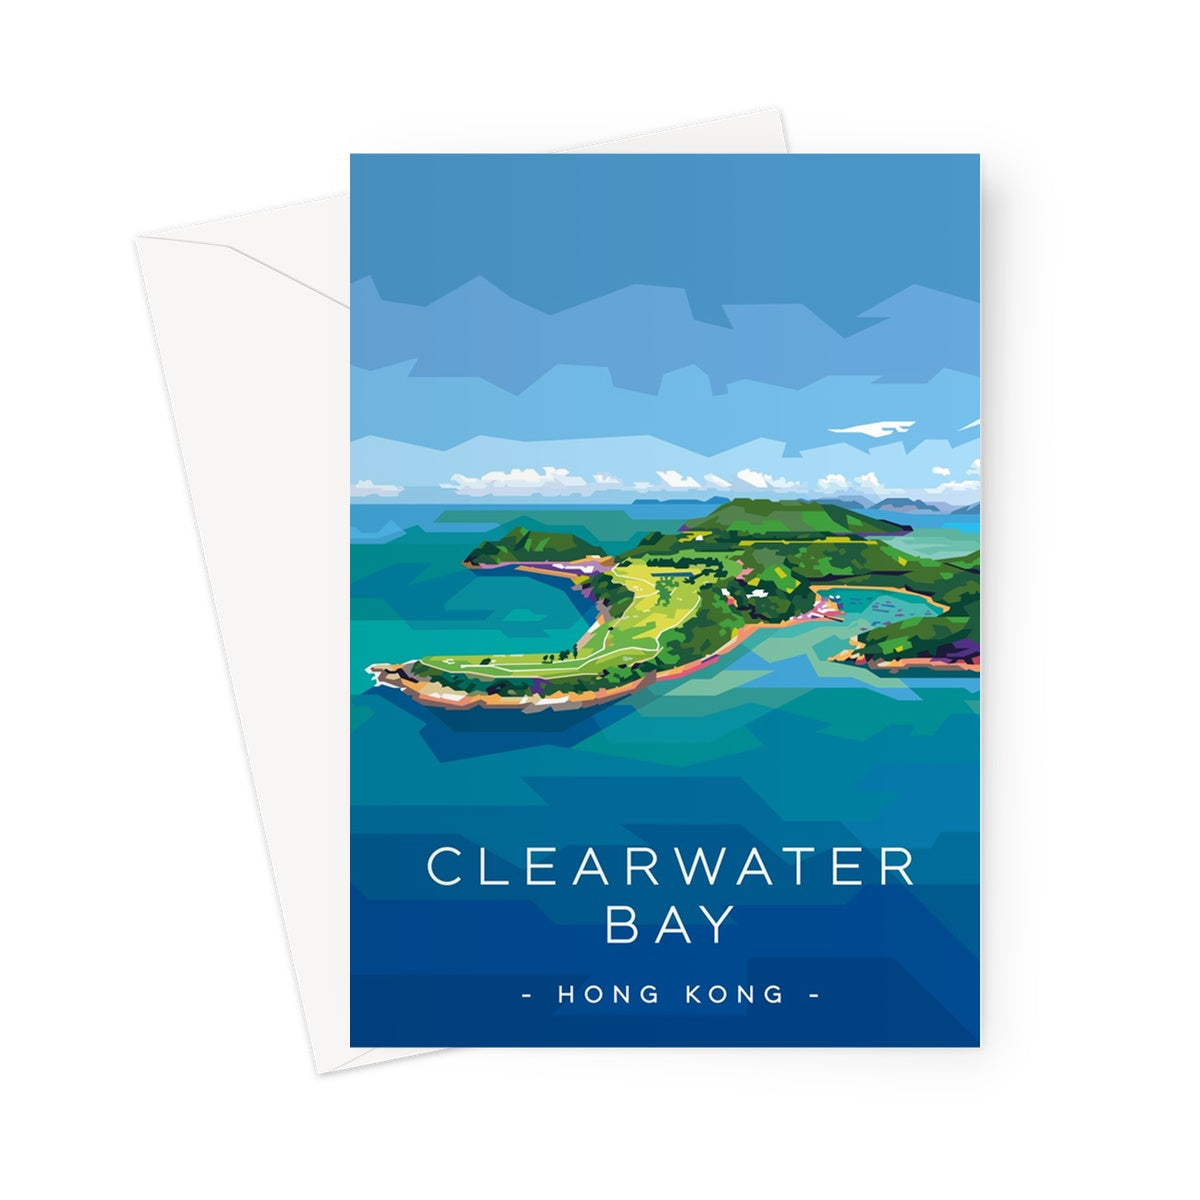 Hong Kong Travel - Clearwater Bay Greeting Card